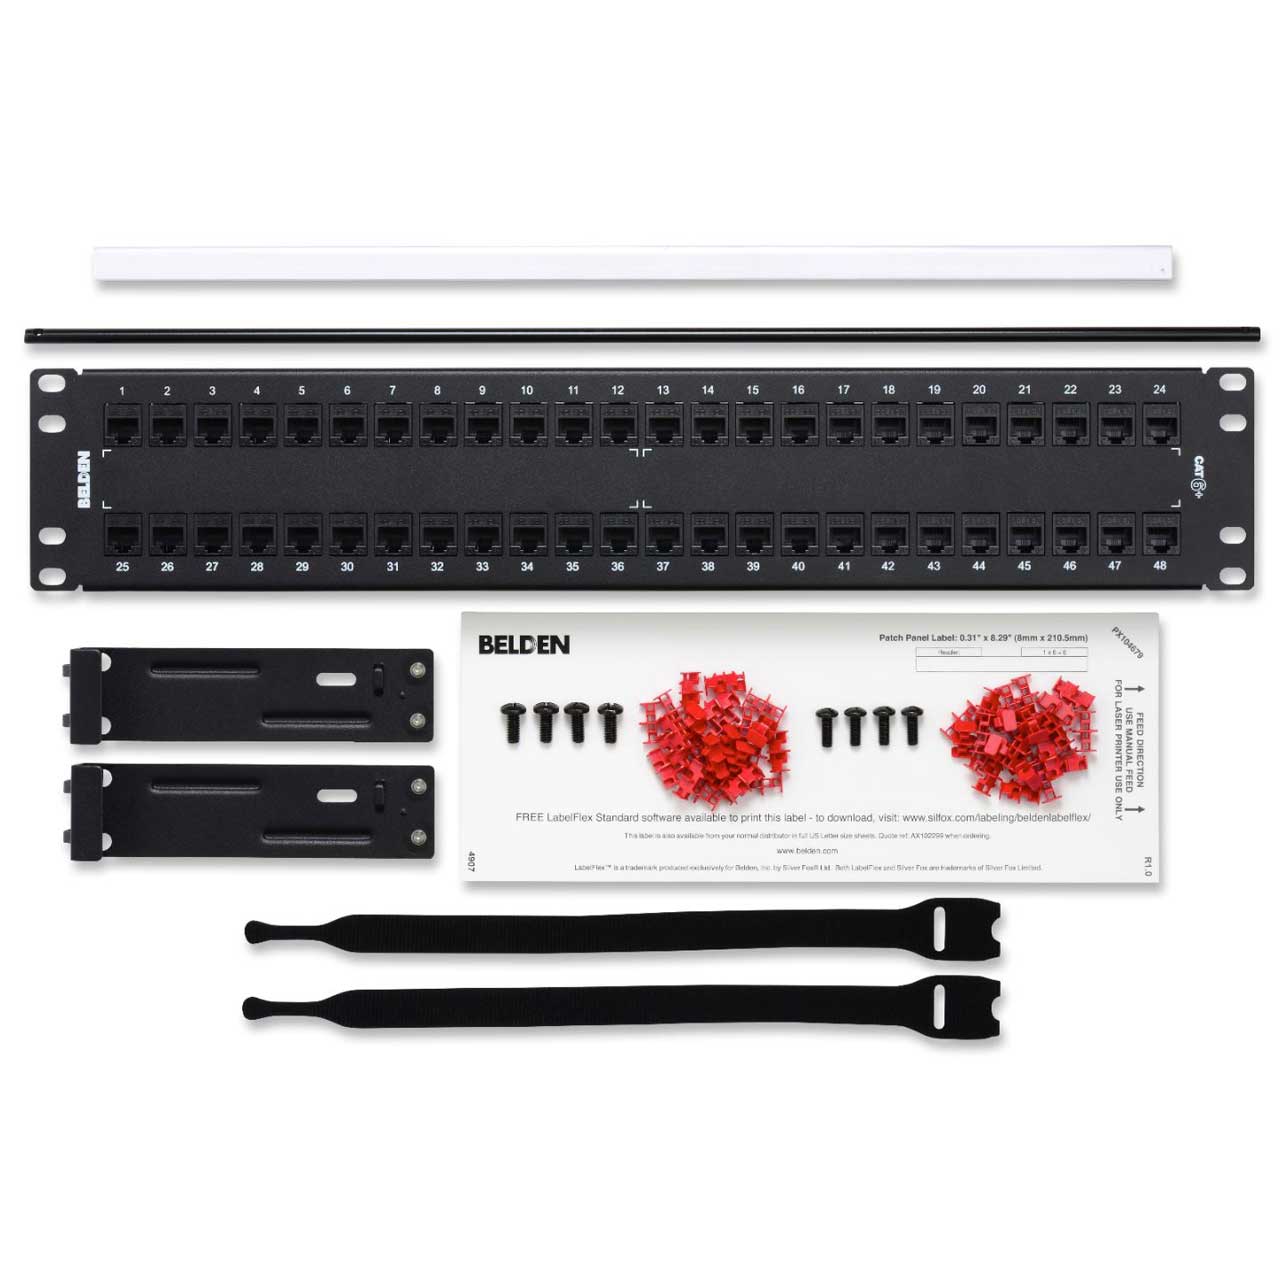 Belden AX103255 2RU 48-Port CAT6+ KeyConnect Patch Panel - Black BL-AX103255